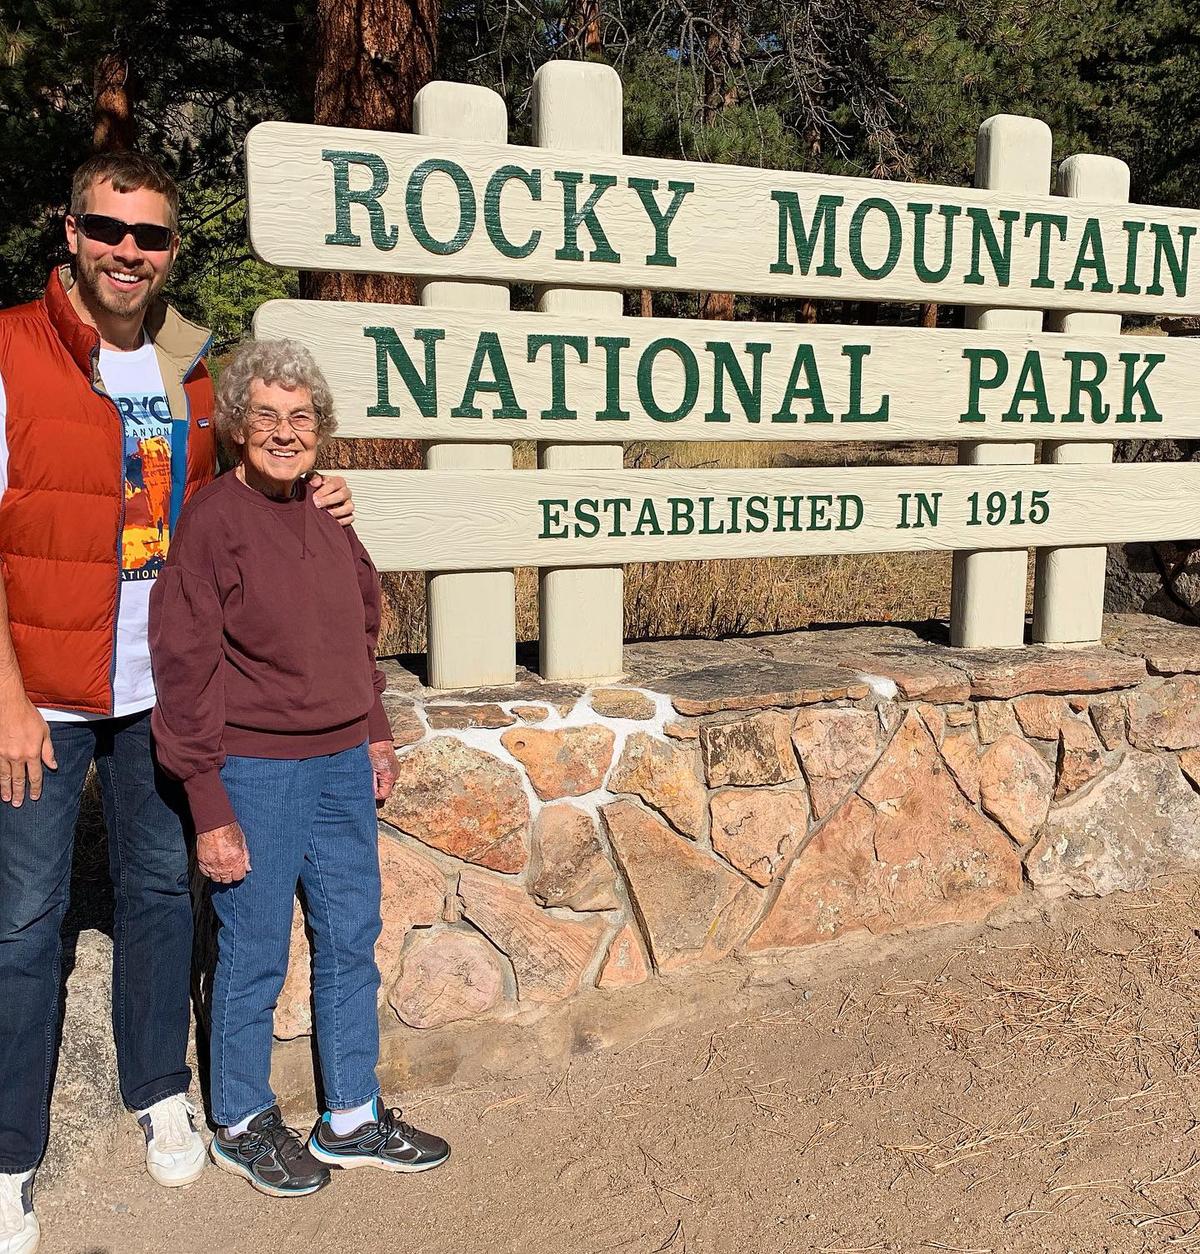 The Rocky Mountains National Park in Colorado. (Courtesy of Brad Ryan)